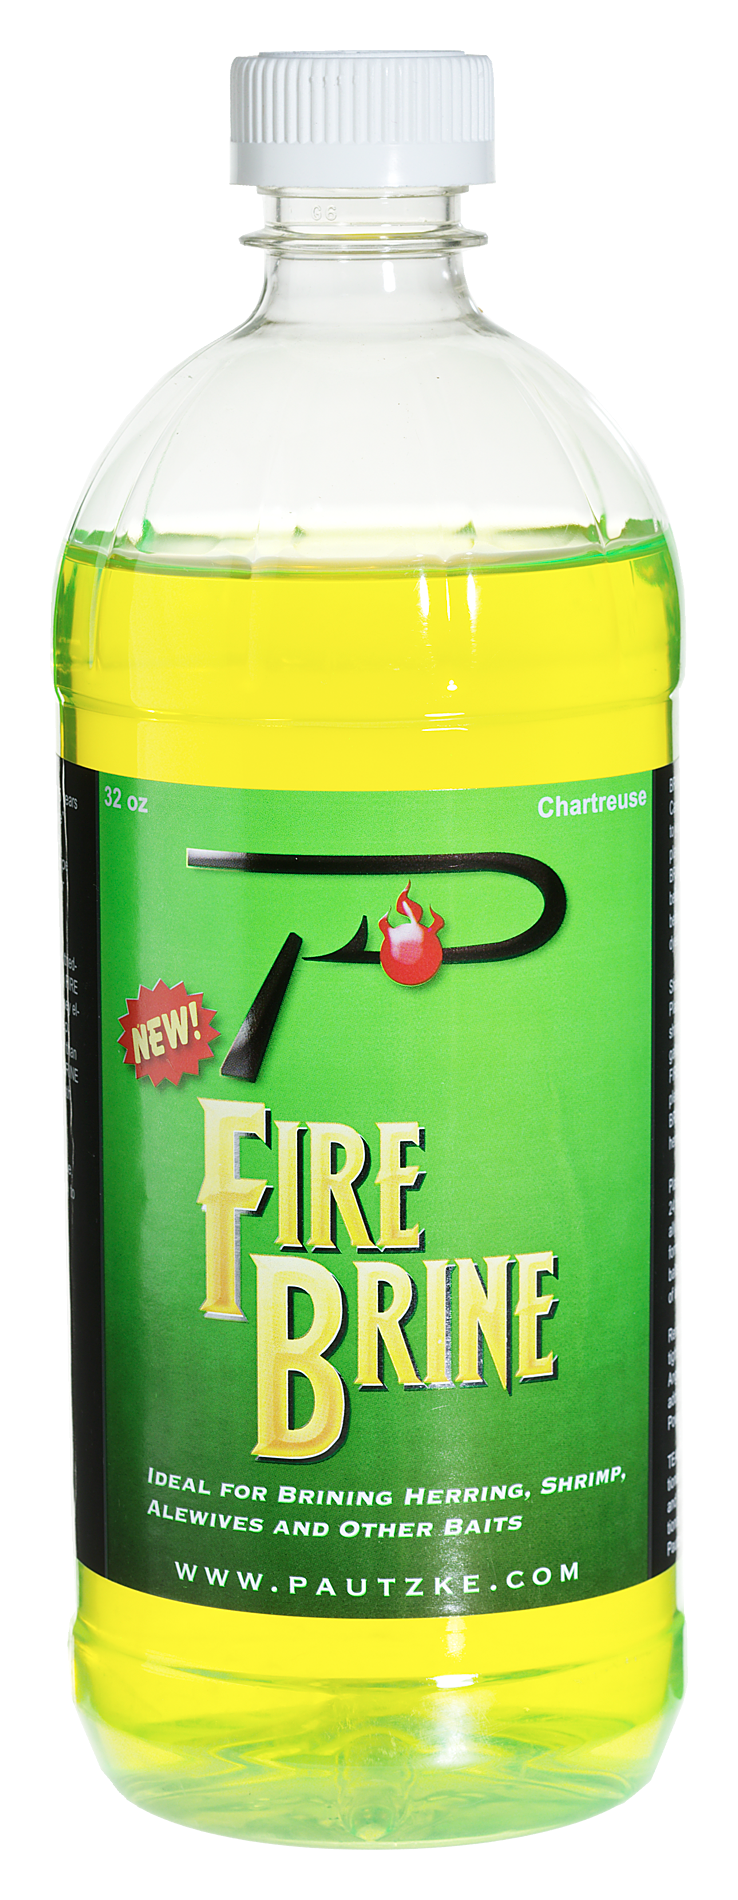 Pautzke Fire Brine - Chartreuse